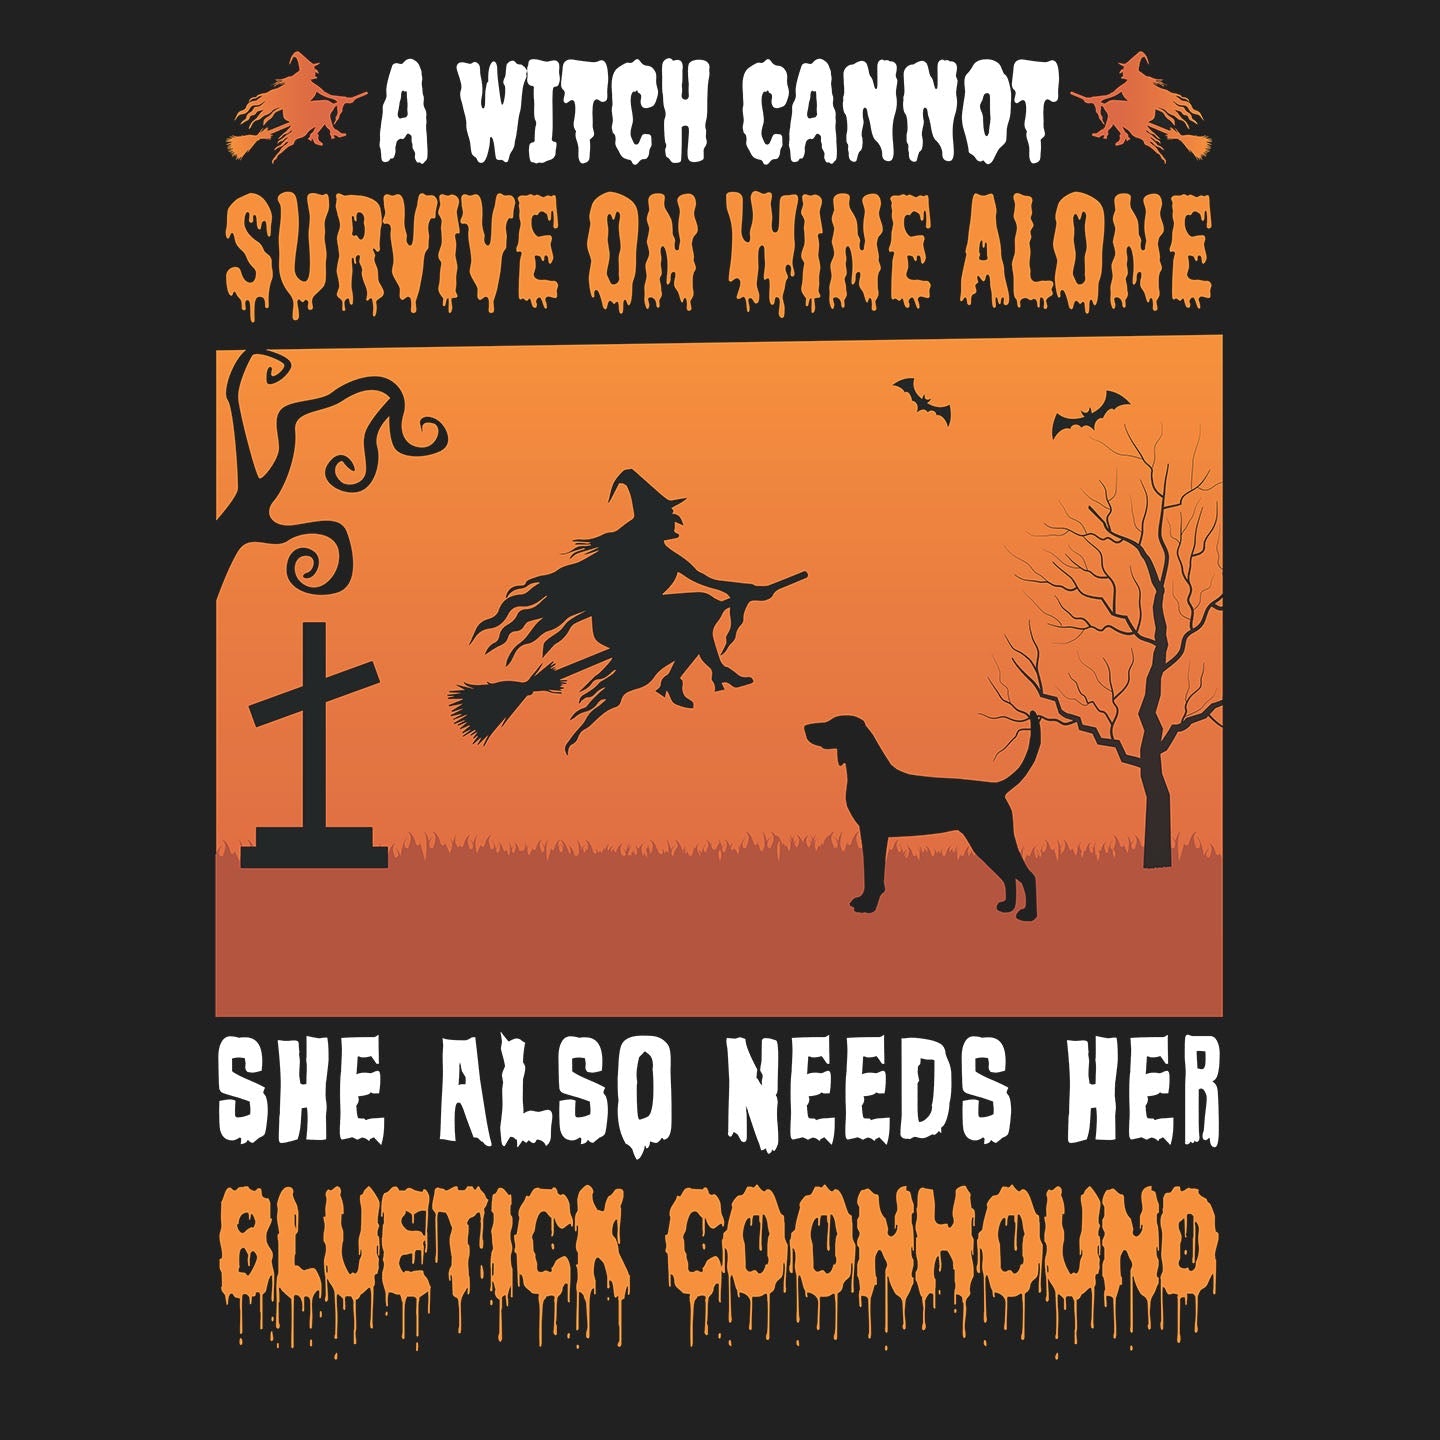 A Witch Needs Her Bluetick Coonhound - Adult Unisex Crewneck Sweatshirt